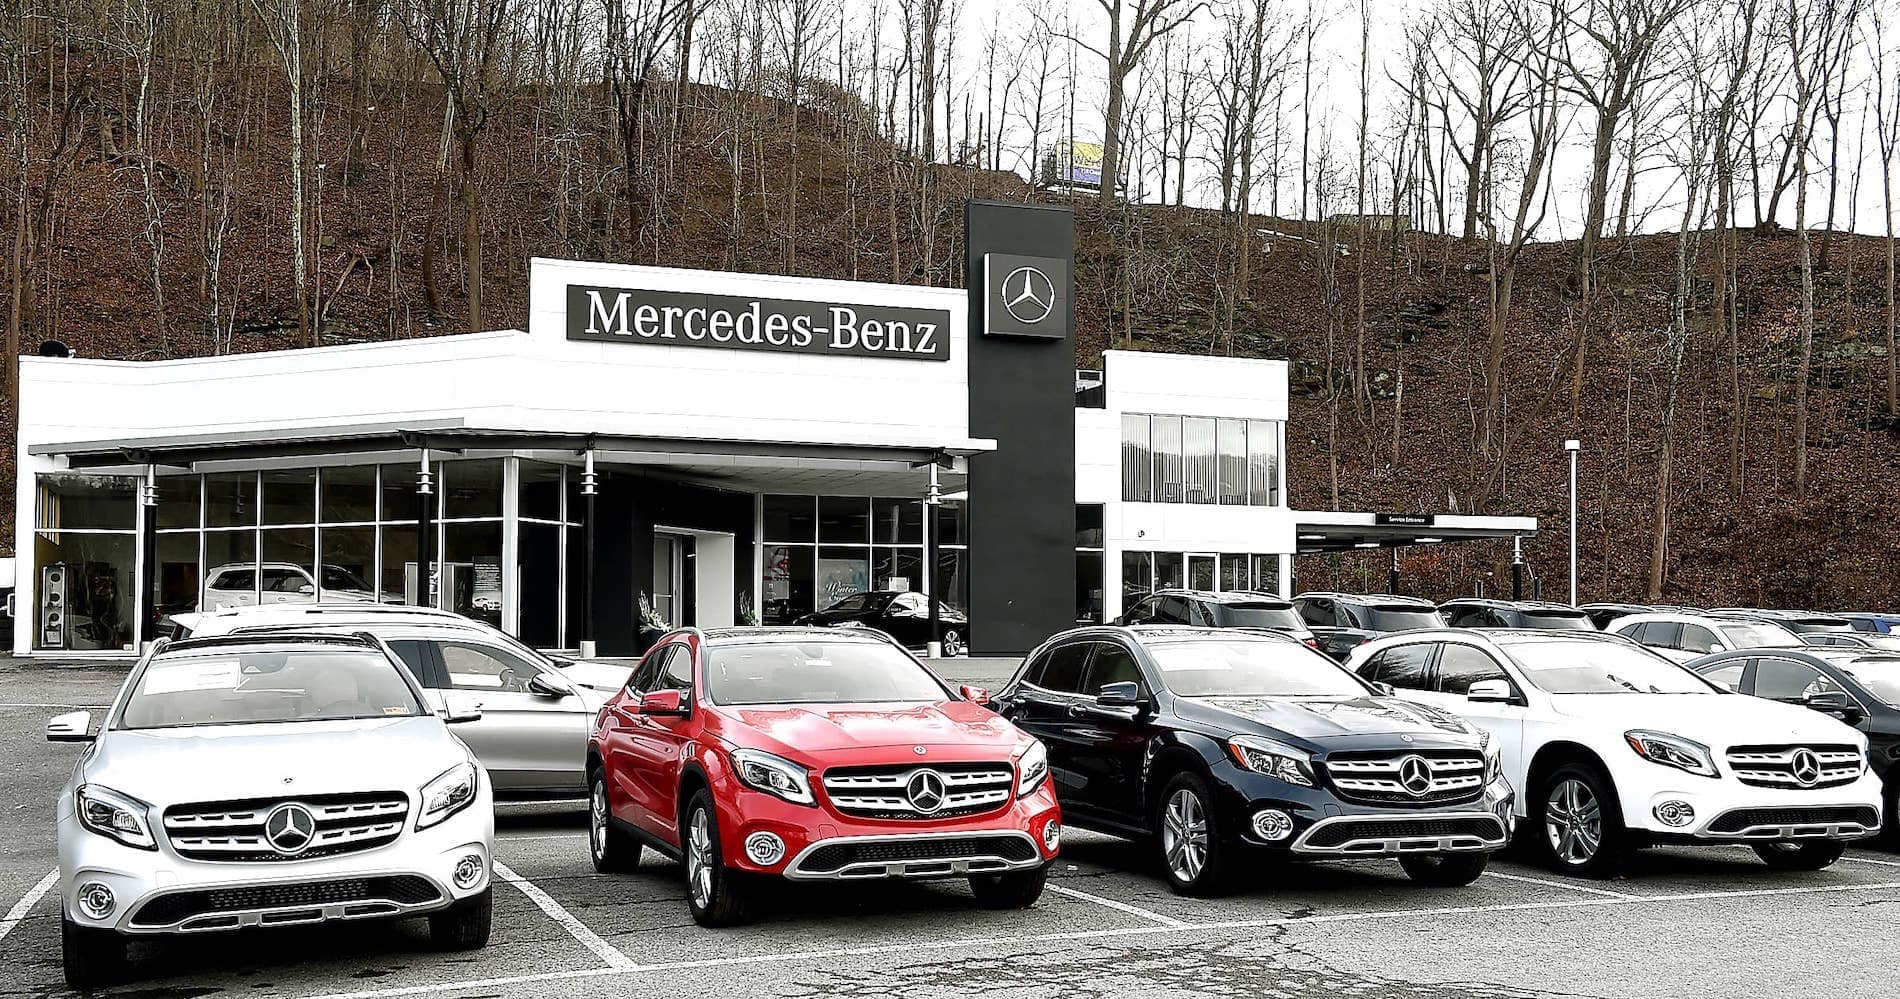 Mercedes-Benz of Morgantown